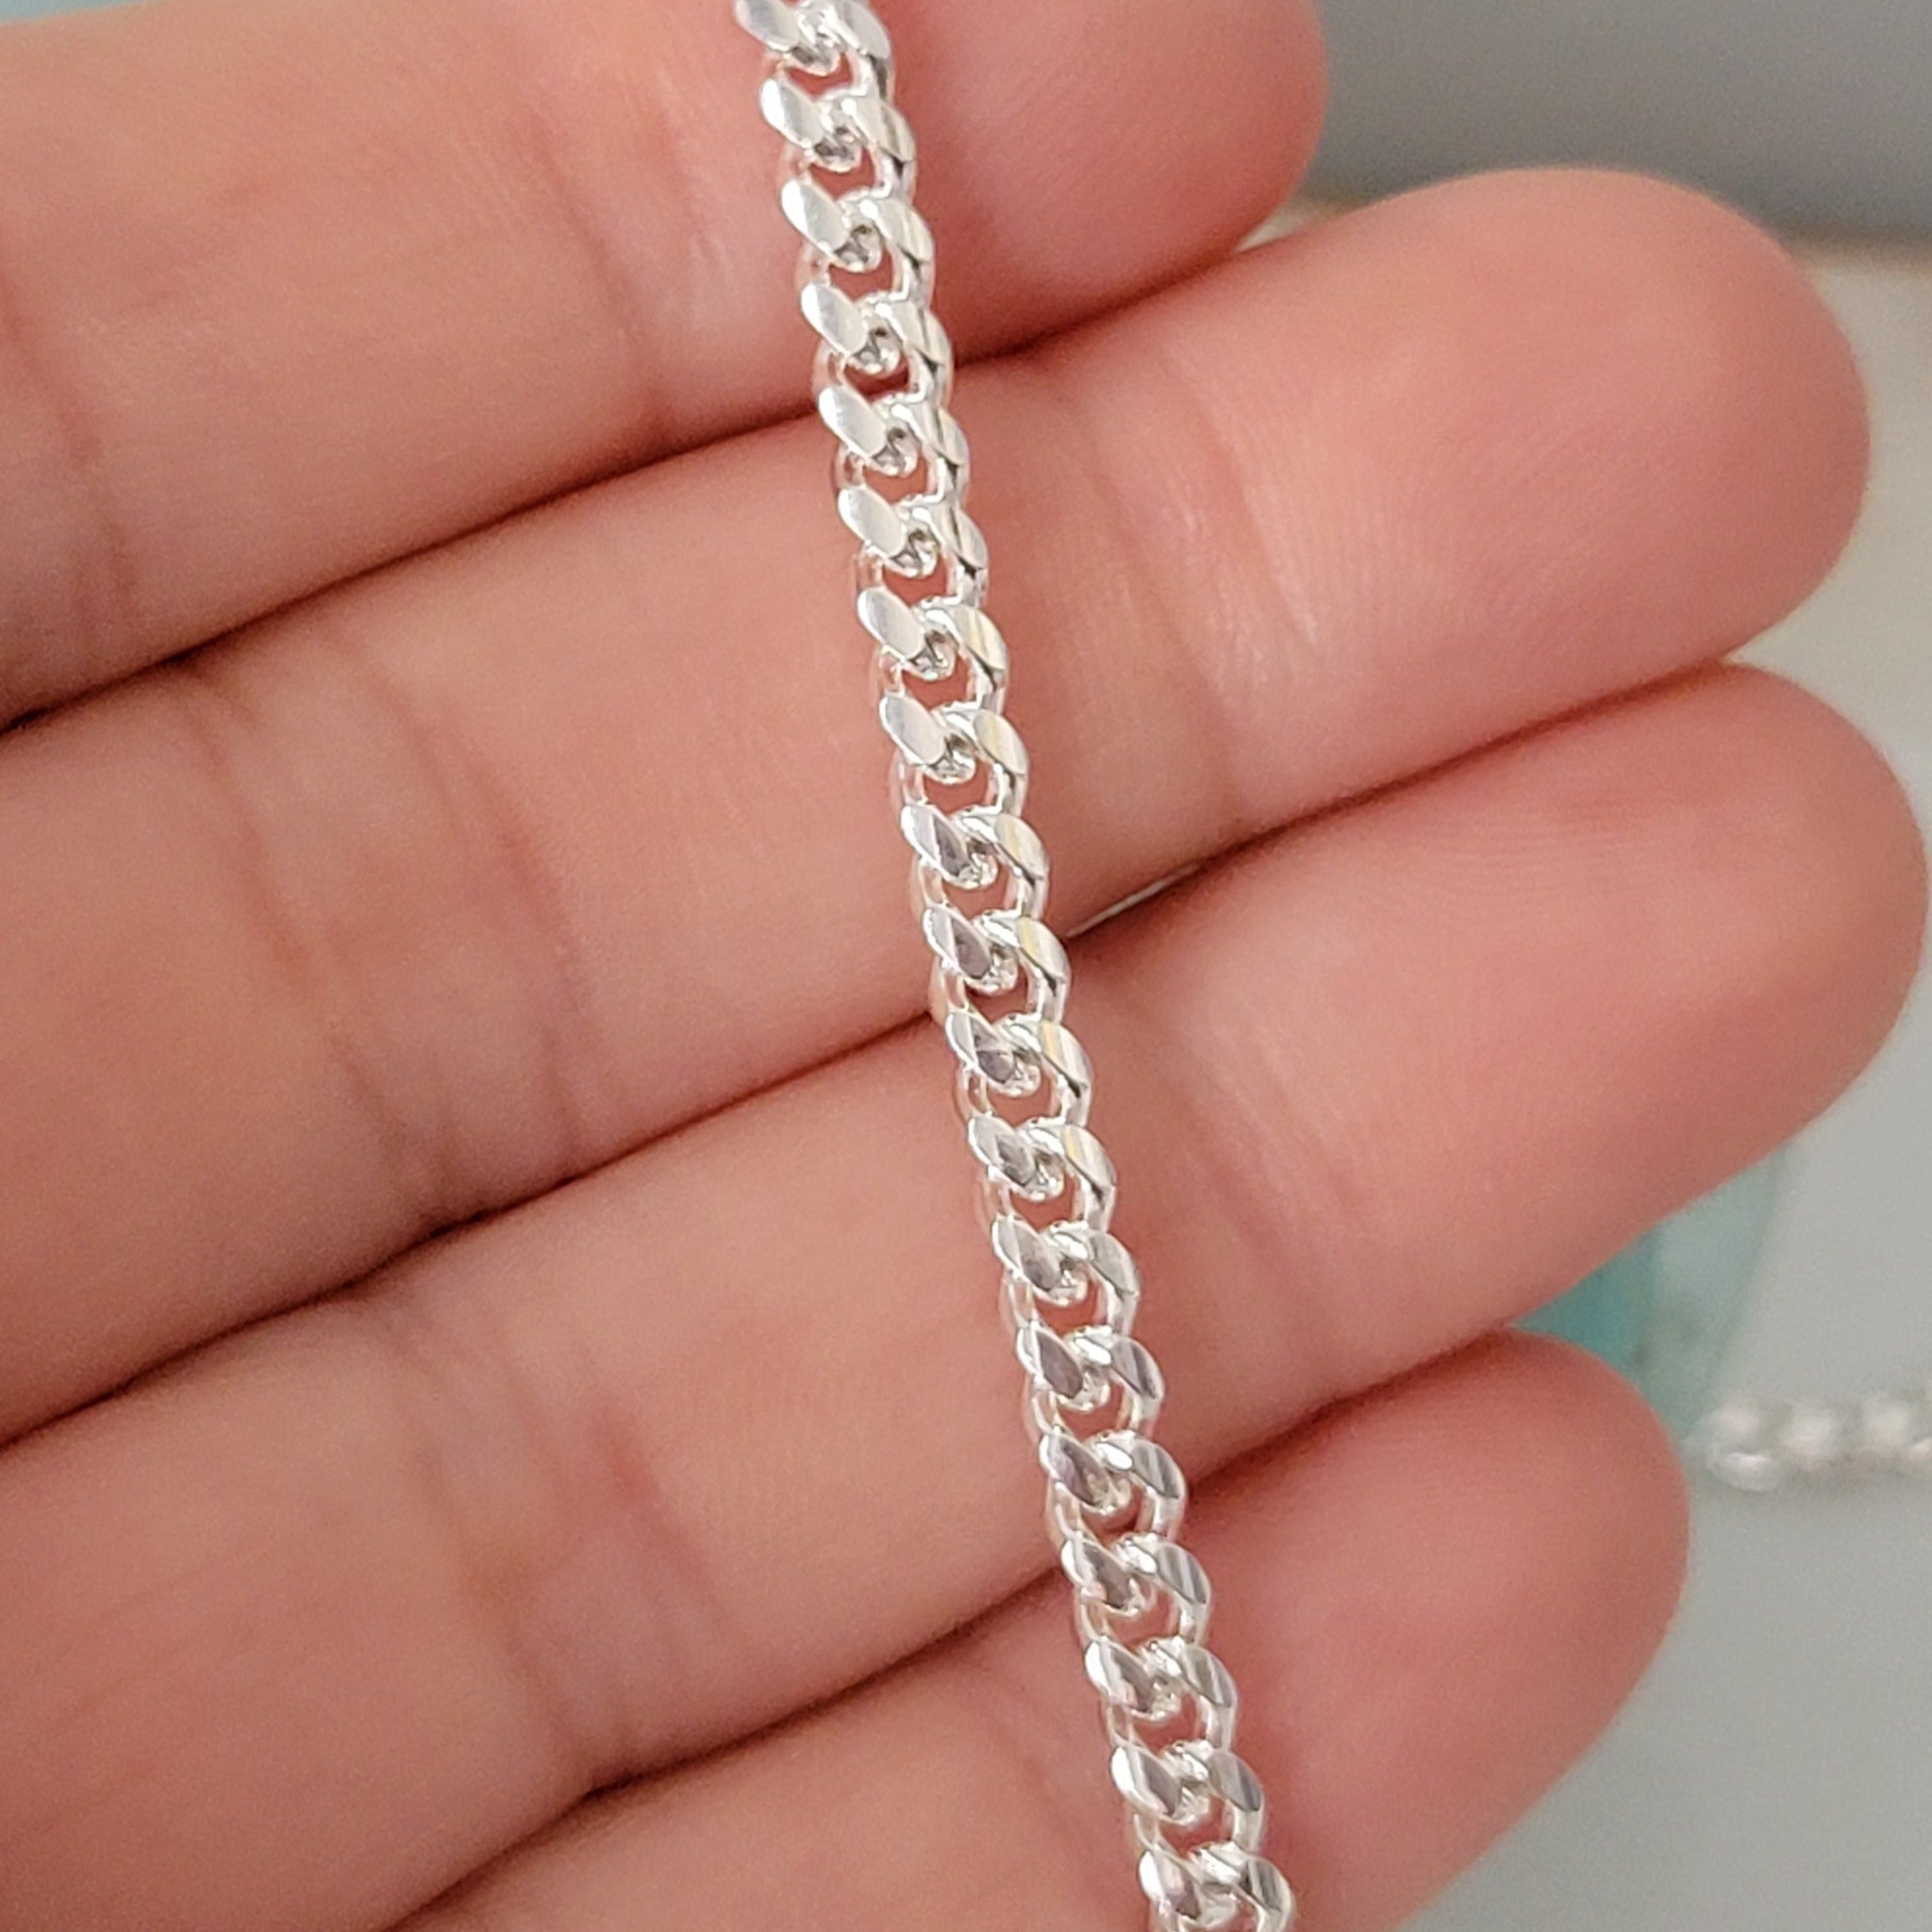 Men's Solid Silver Cuban Chain Necklace - Multiple Lengths